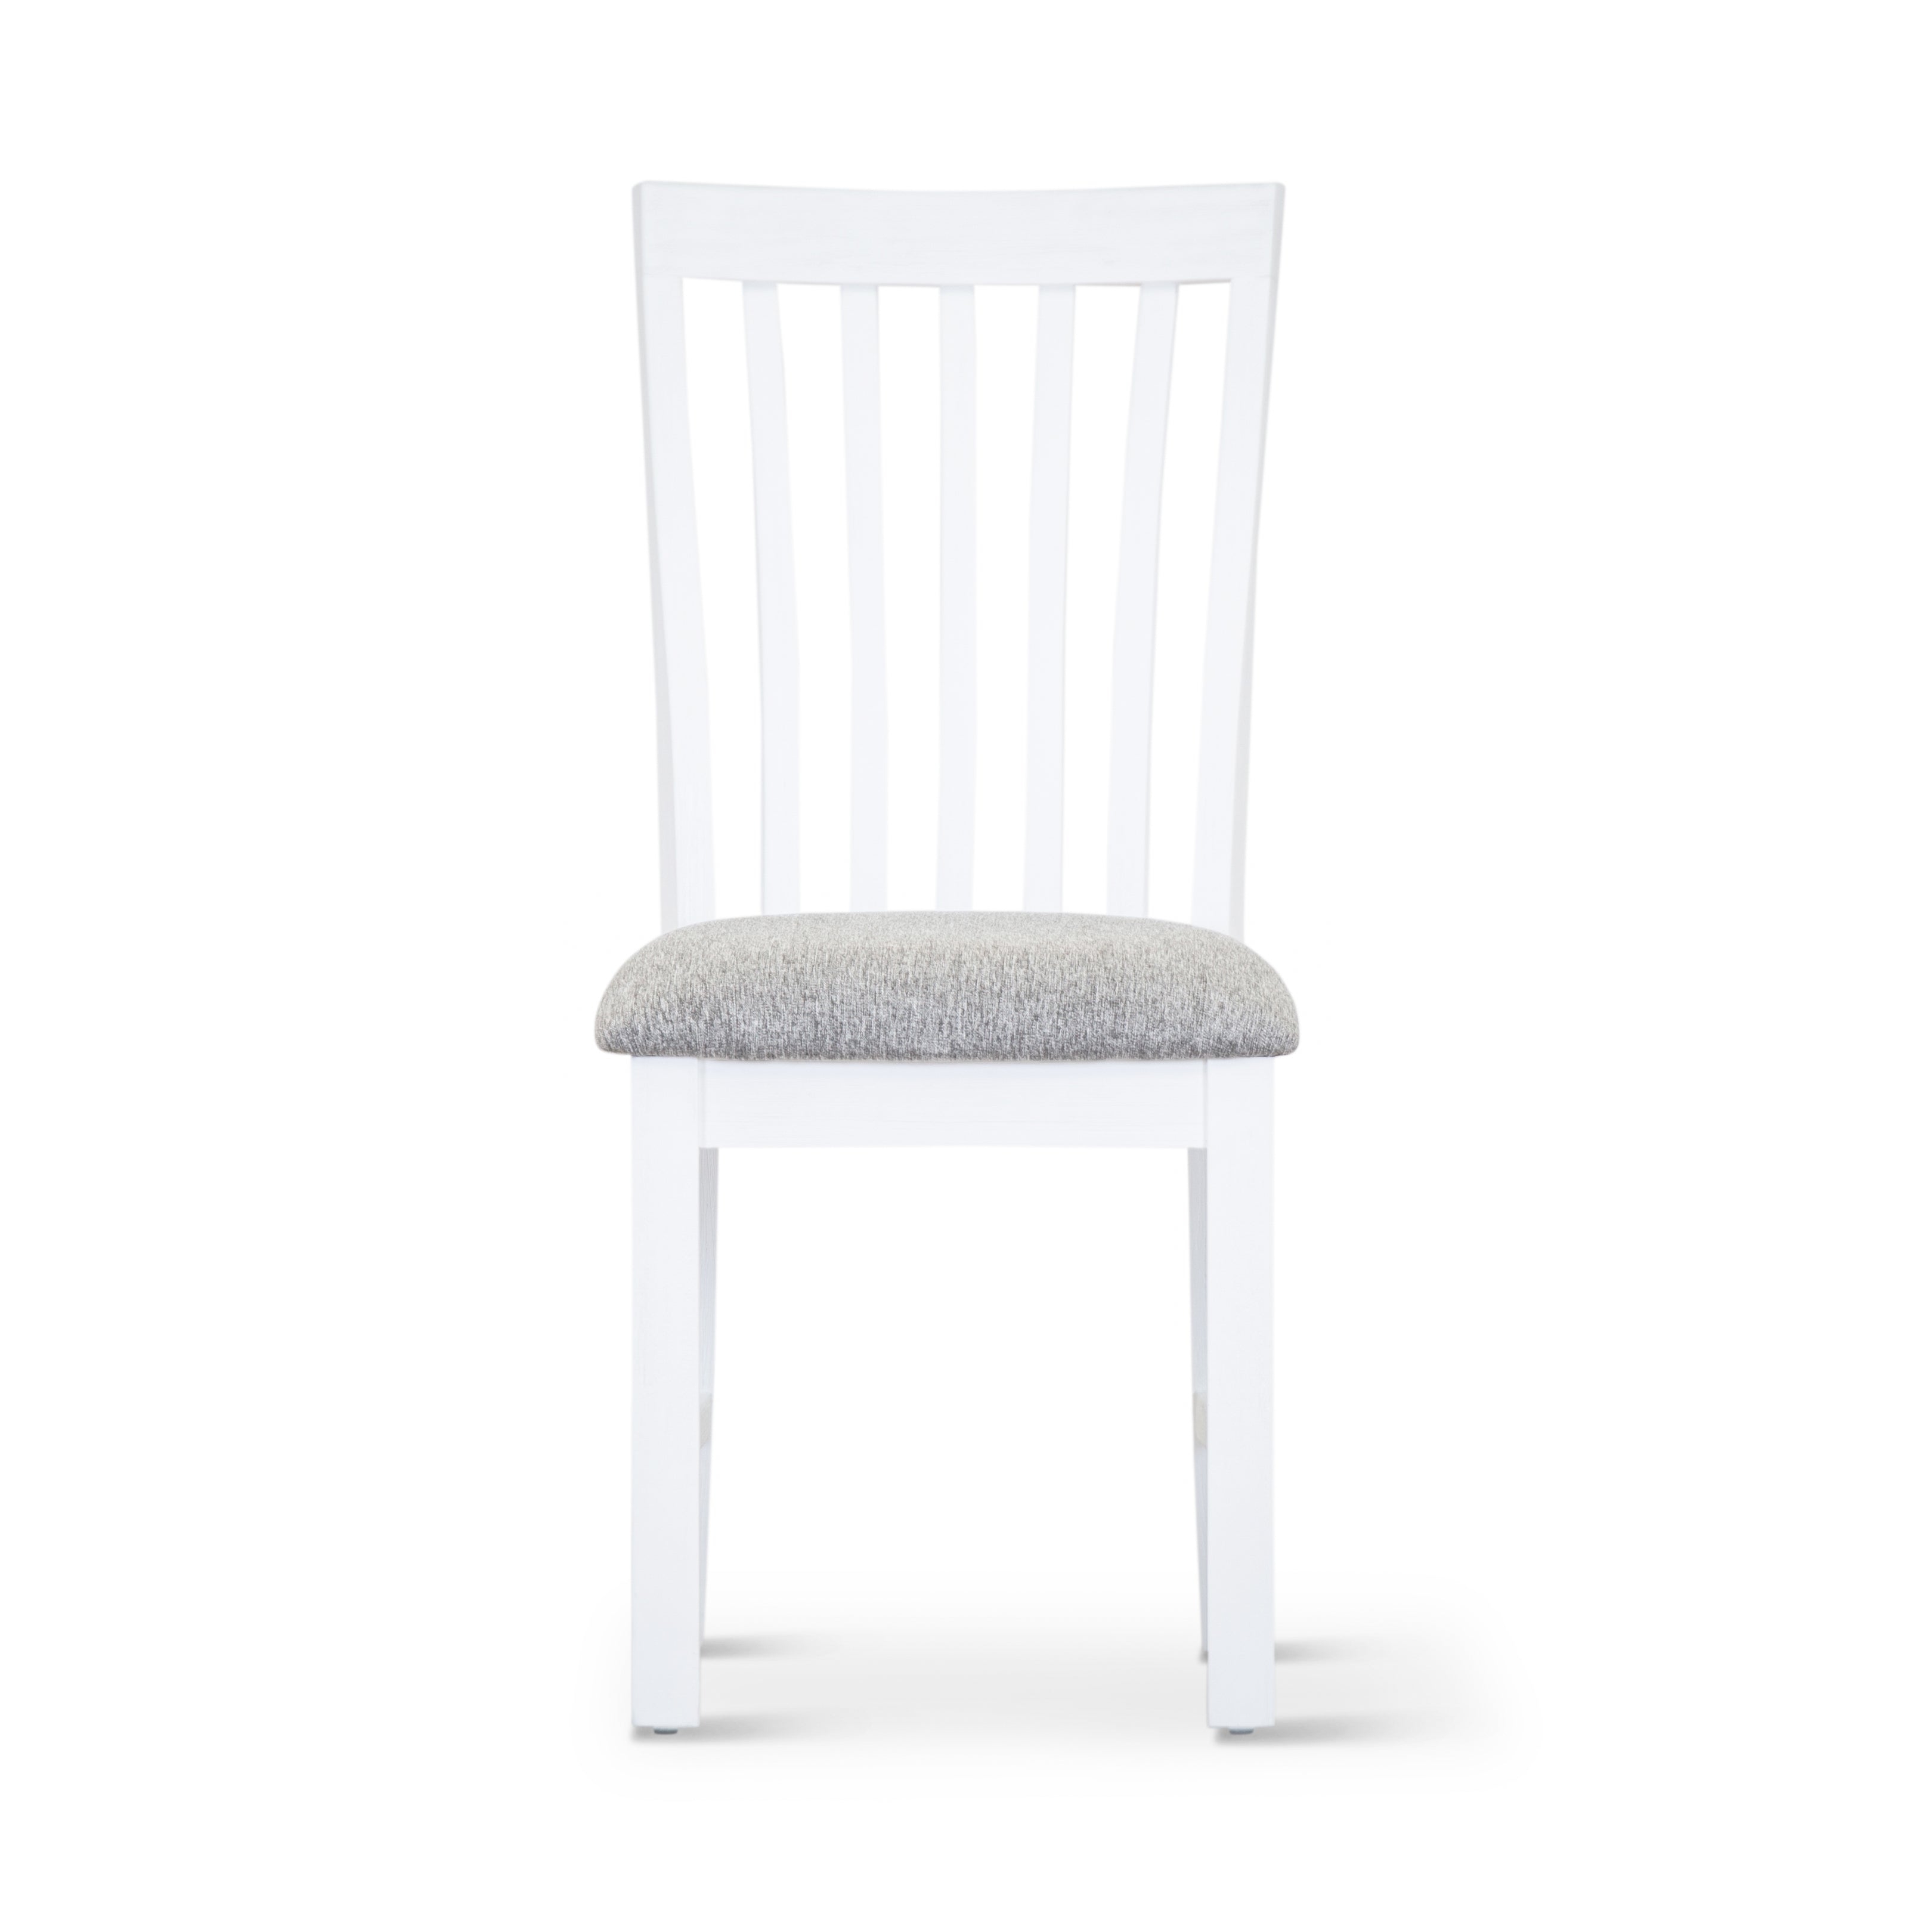 Laelia 7pc Dining Set 180cm Table 6 Chair Acacia Wood Coastal Furniture - White - SILBERSHELL